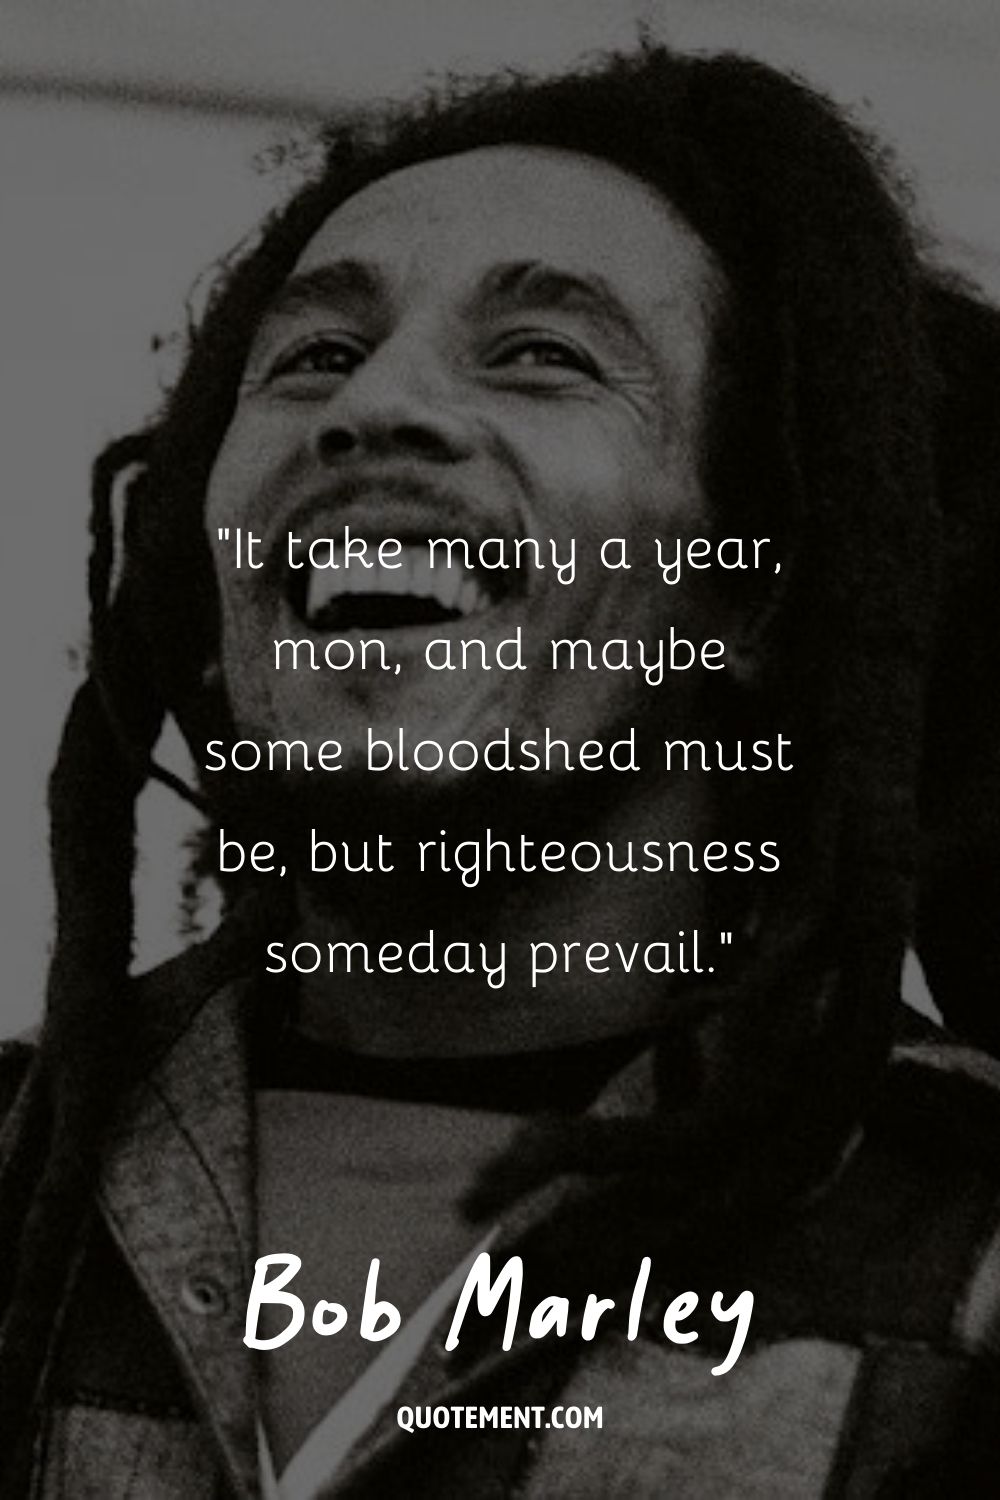 Bob Marley smiling in plaid shirt
